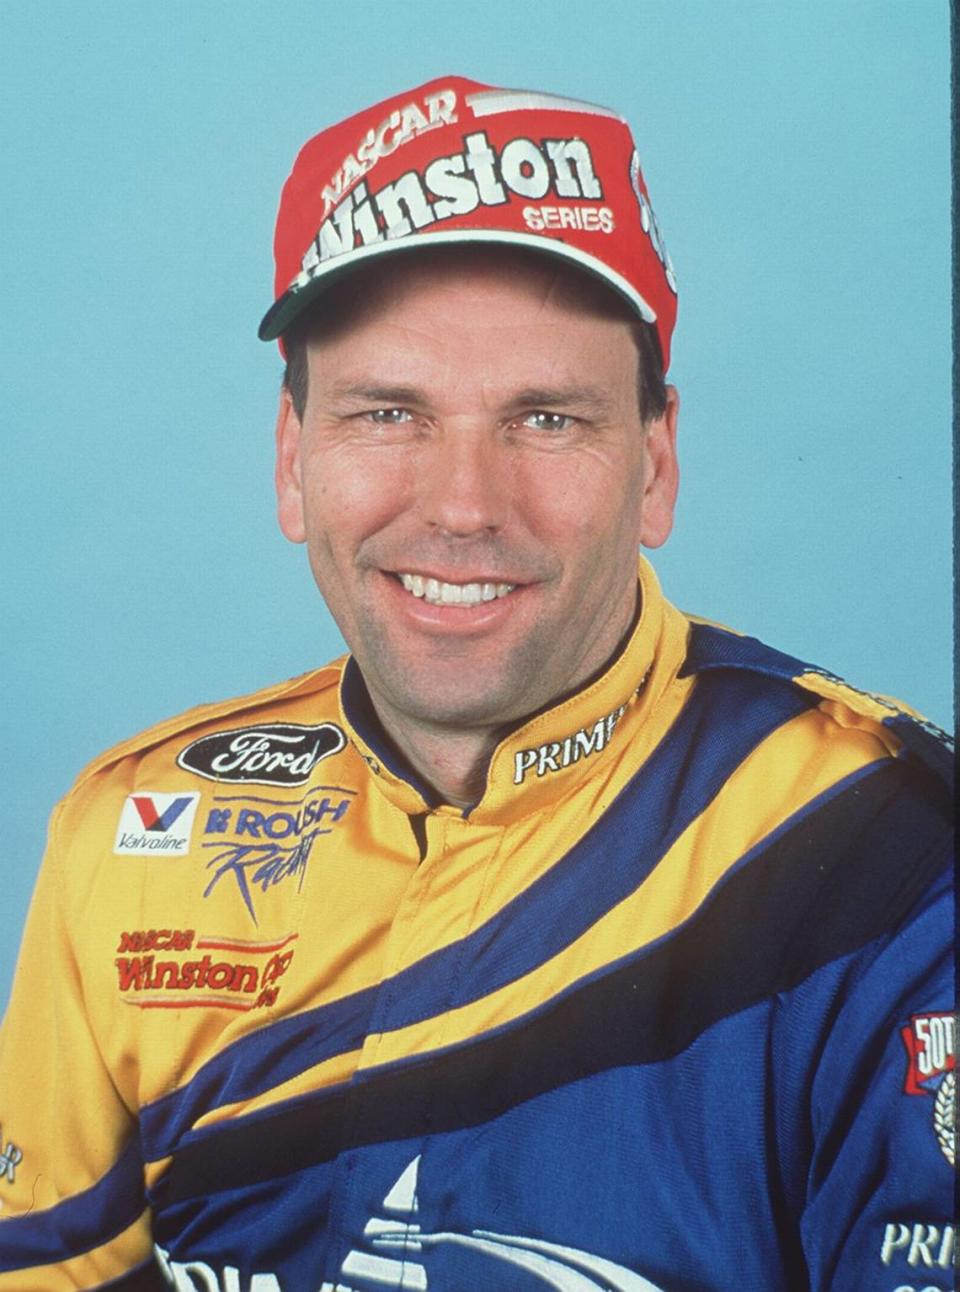 4/22/98 5B: MUSGRAVE [UNPUBLISHED NOTES:] (1998) NASCAR driver... Ted Musgrave (RJR SPORTS MARKETING)